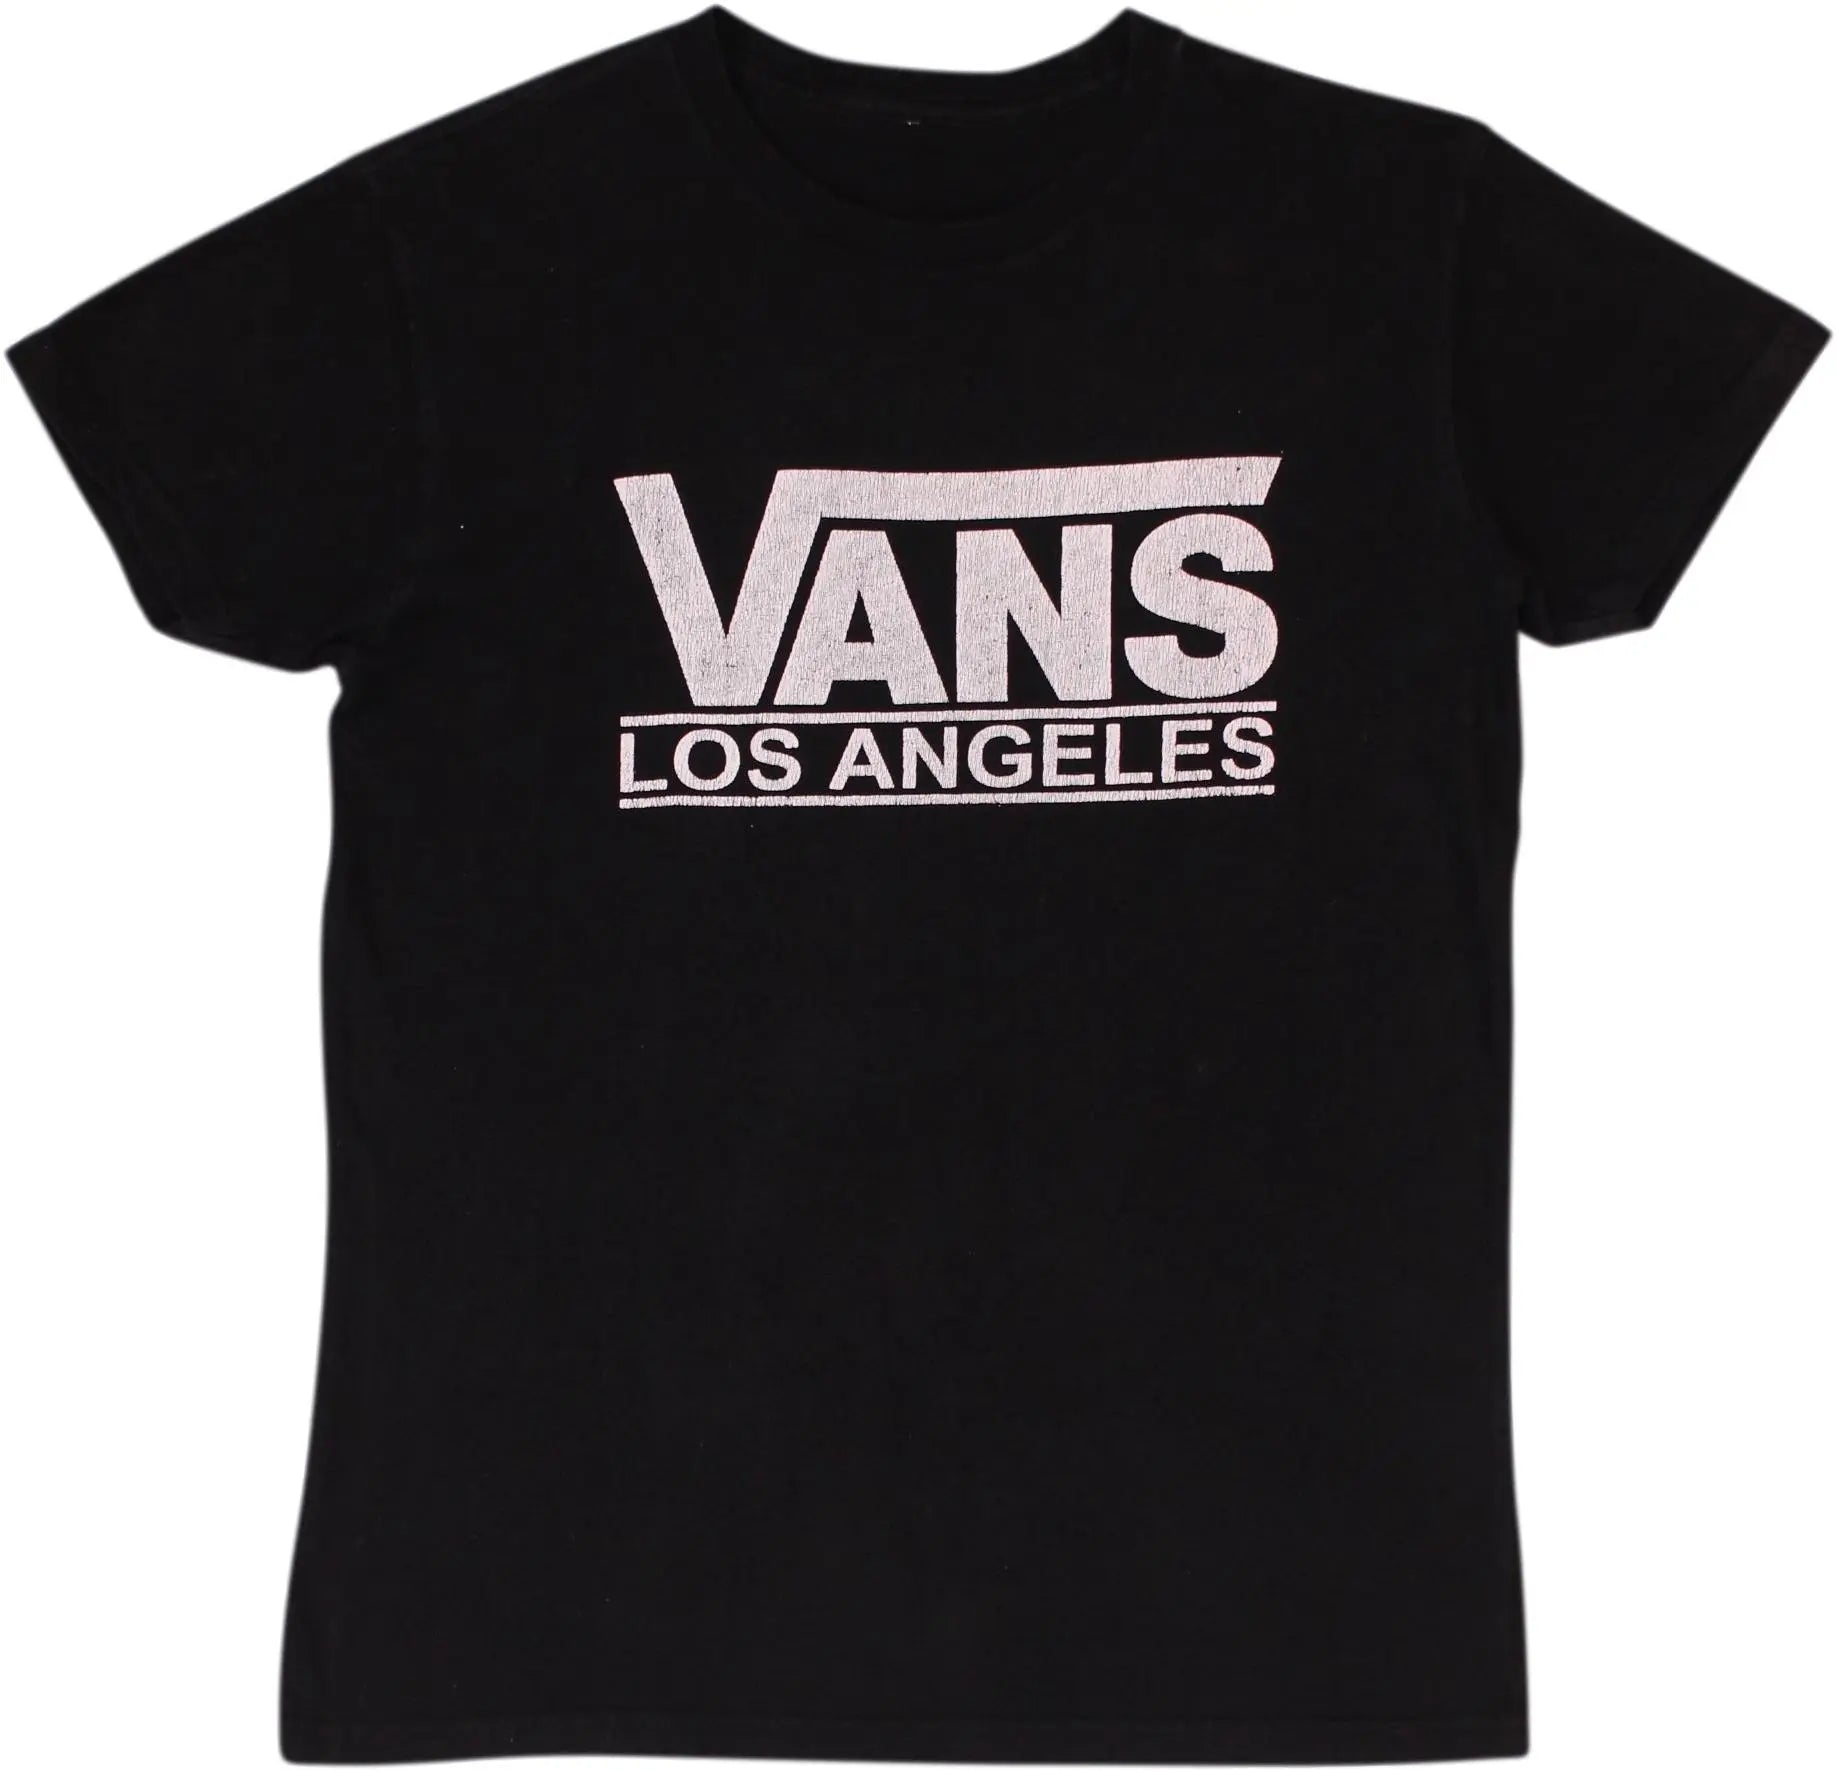 Vans - Vans T-Shirt- ThriftTale.com - Vintage and second handclothing